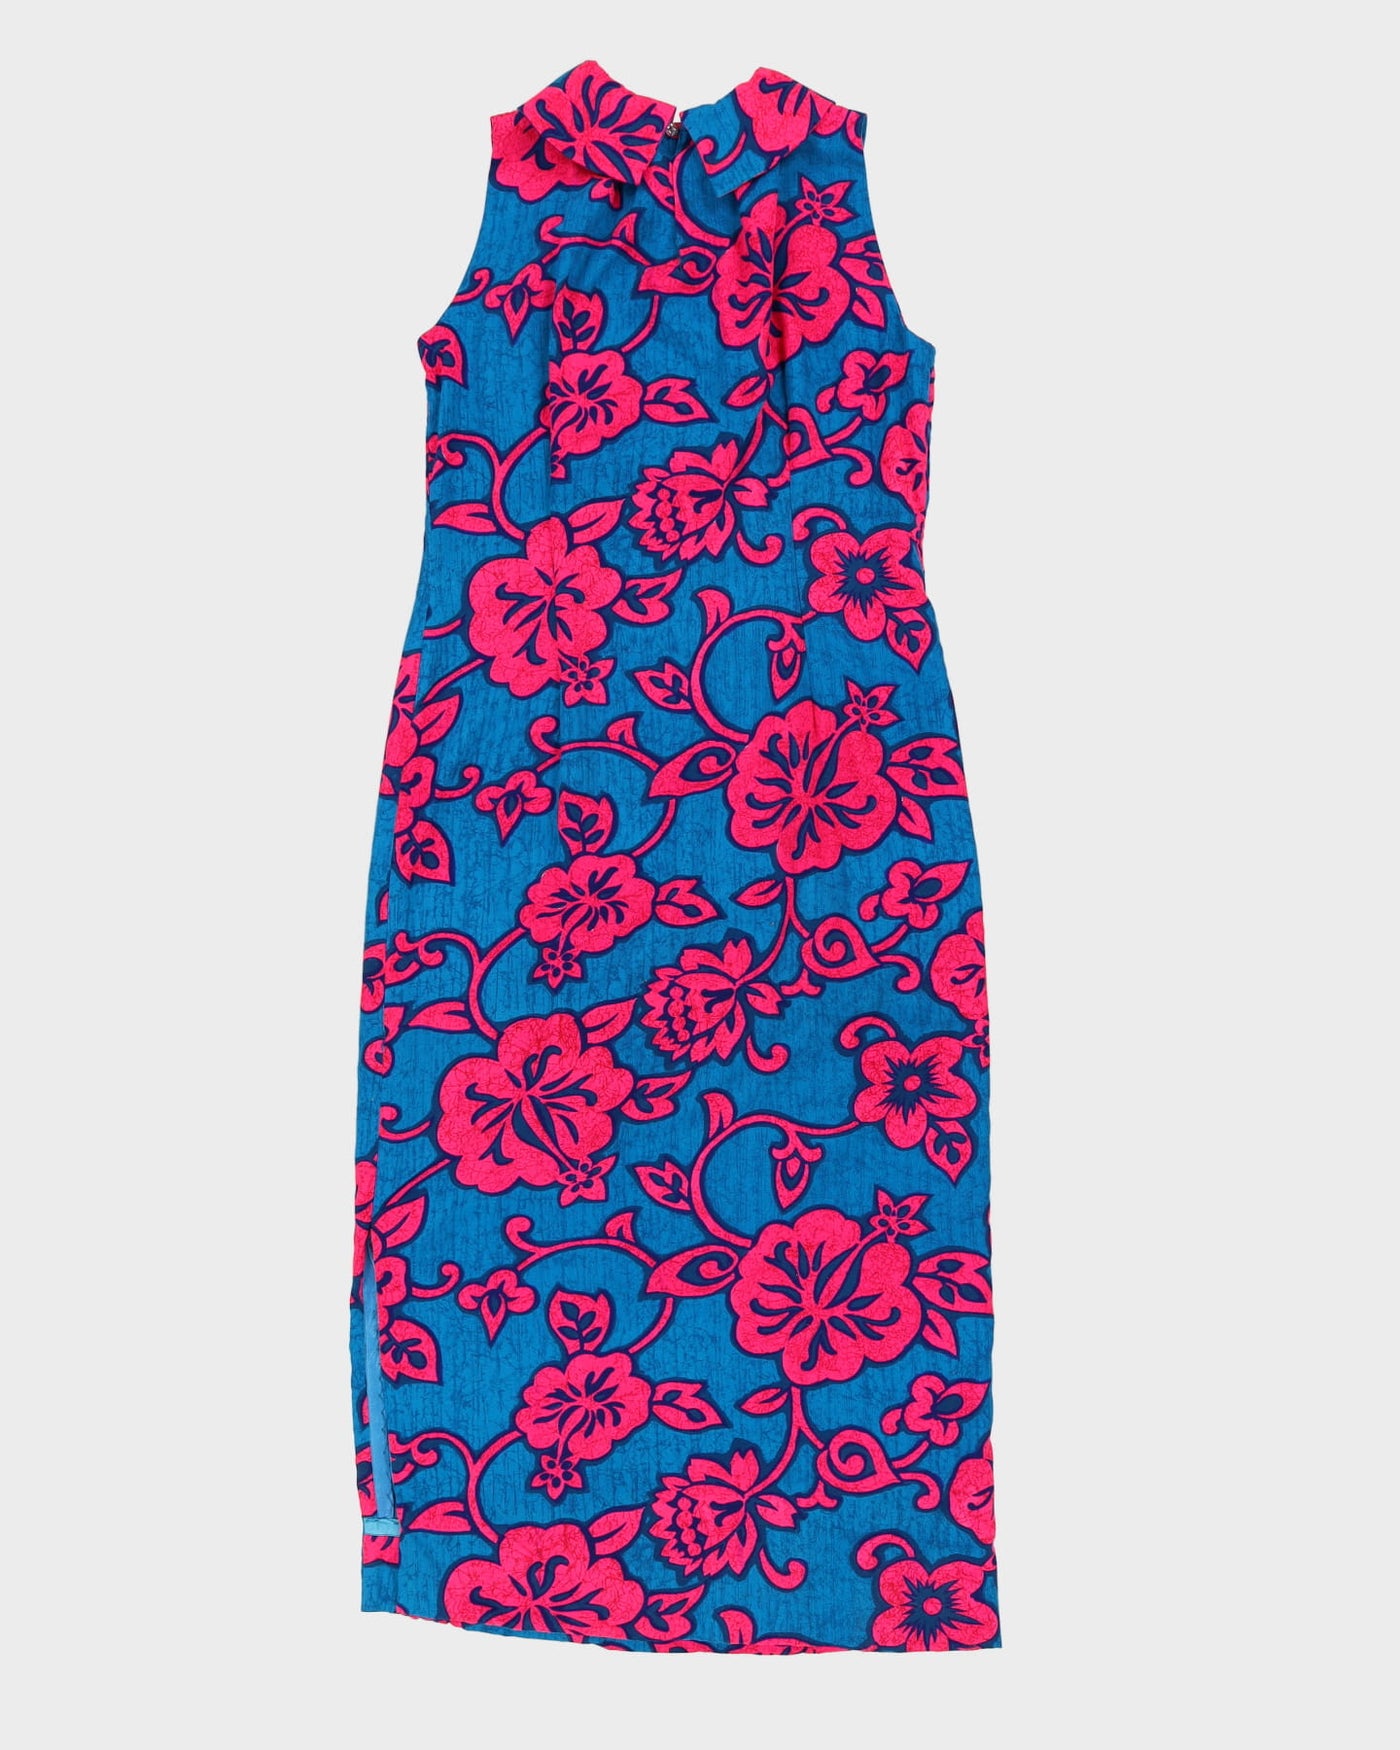 Vintage 1970s Blue And Pink Hawaiian Dress - M